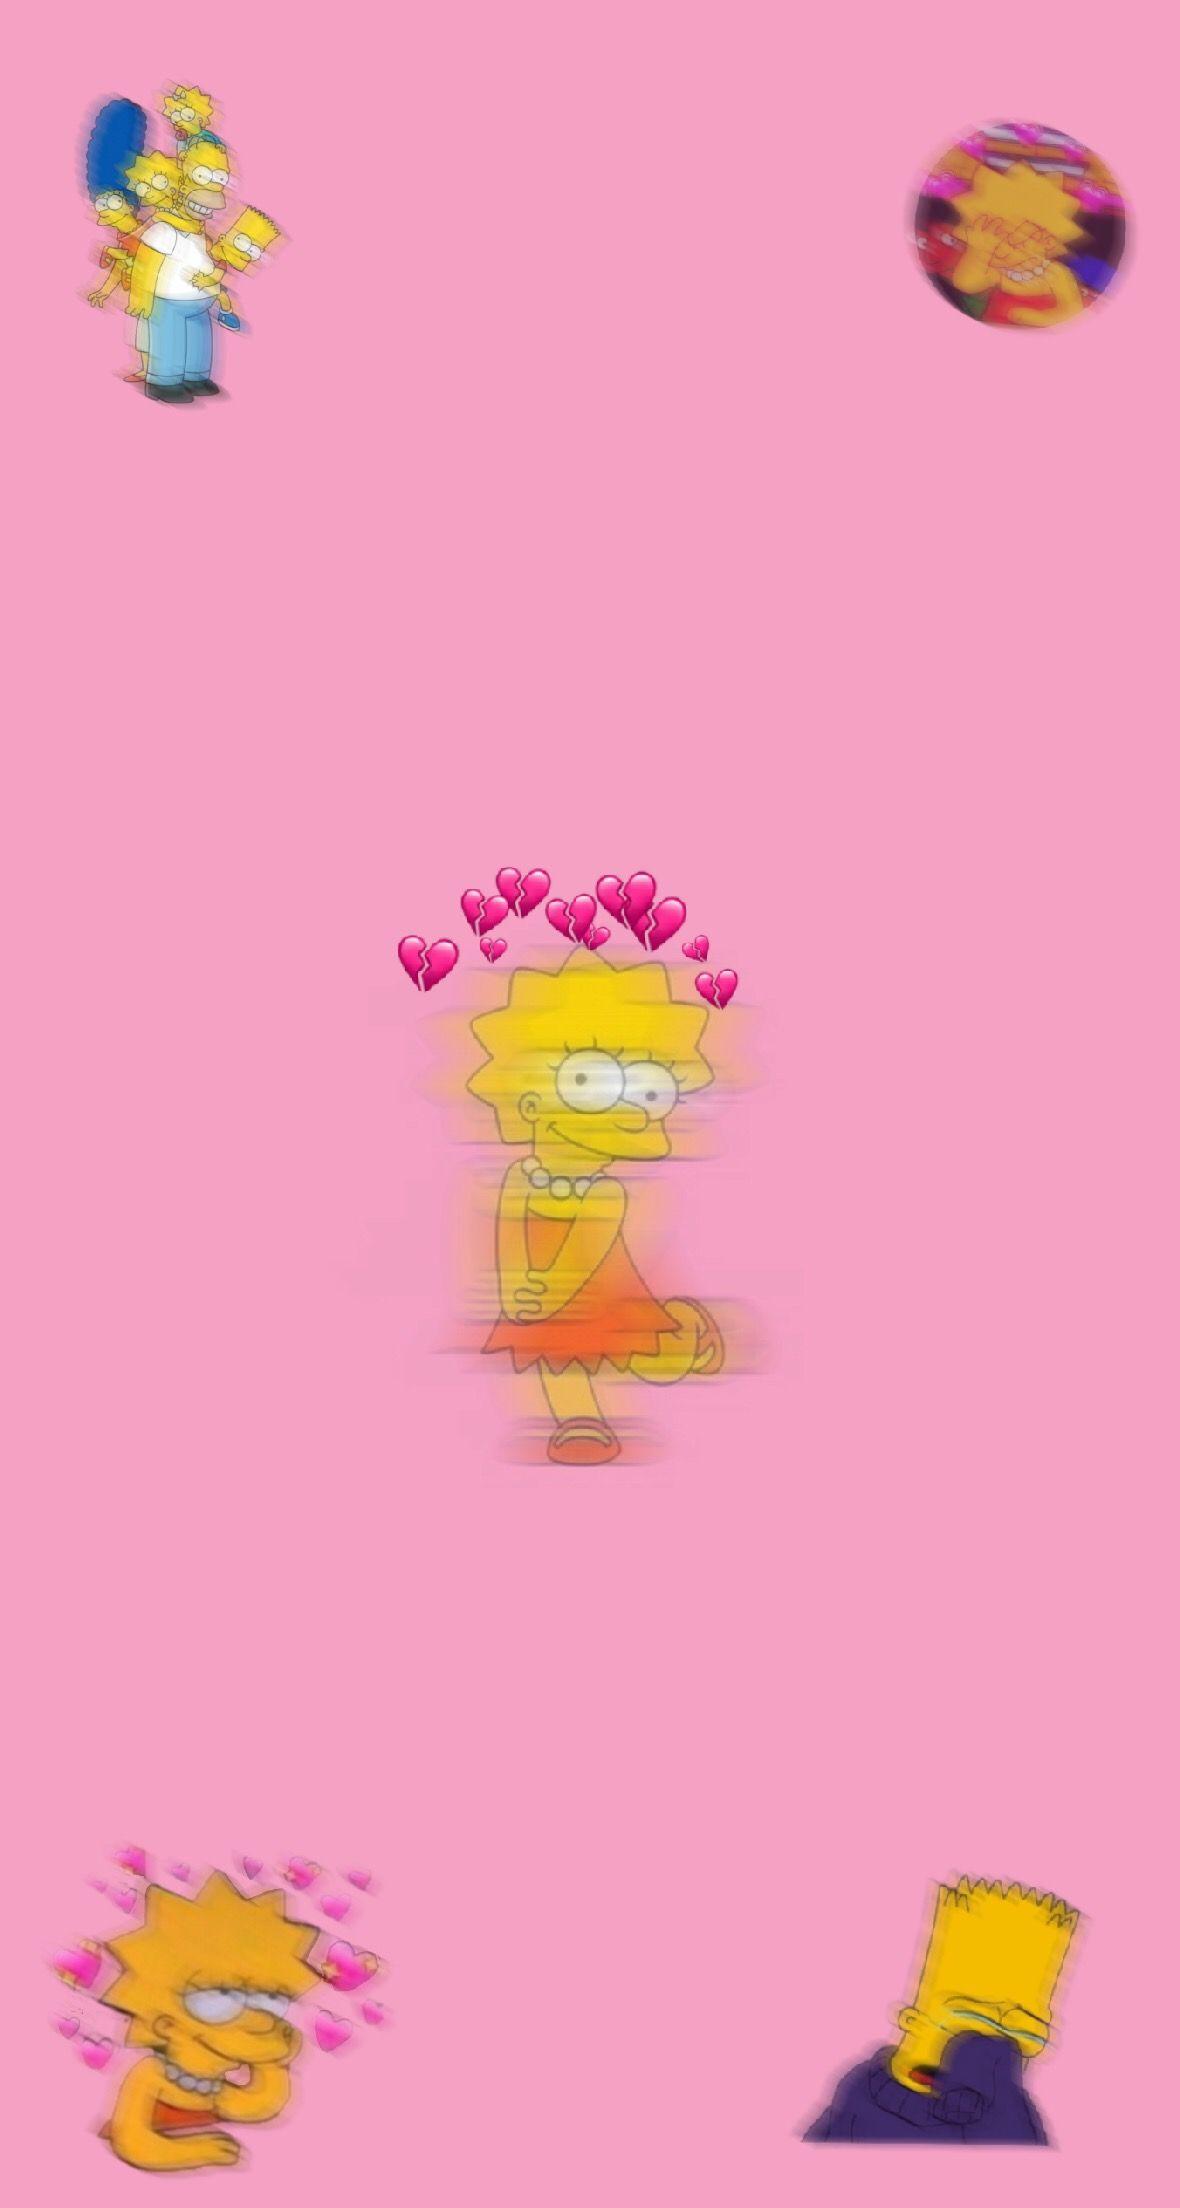 Lisa Simpson Wallpaper By 1992 On Deviantart - The Simpsons, Lisa Simpson, Bart Simpson, Homer Simpson